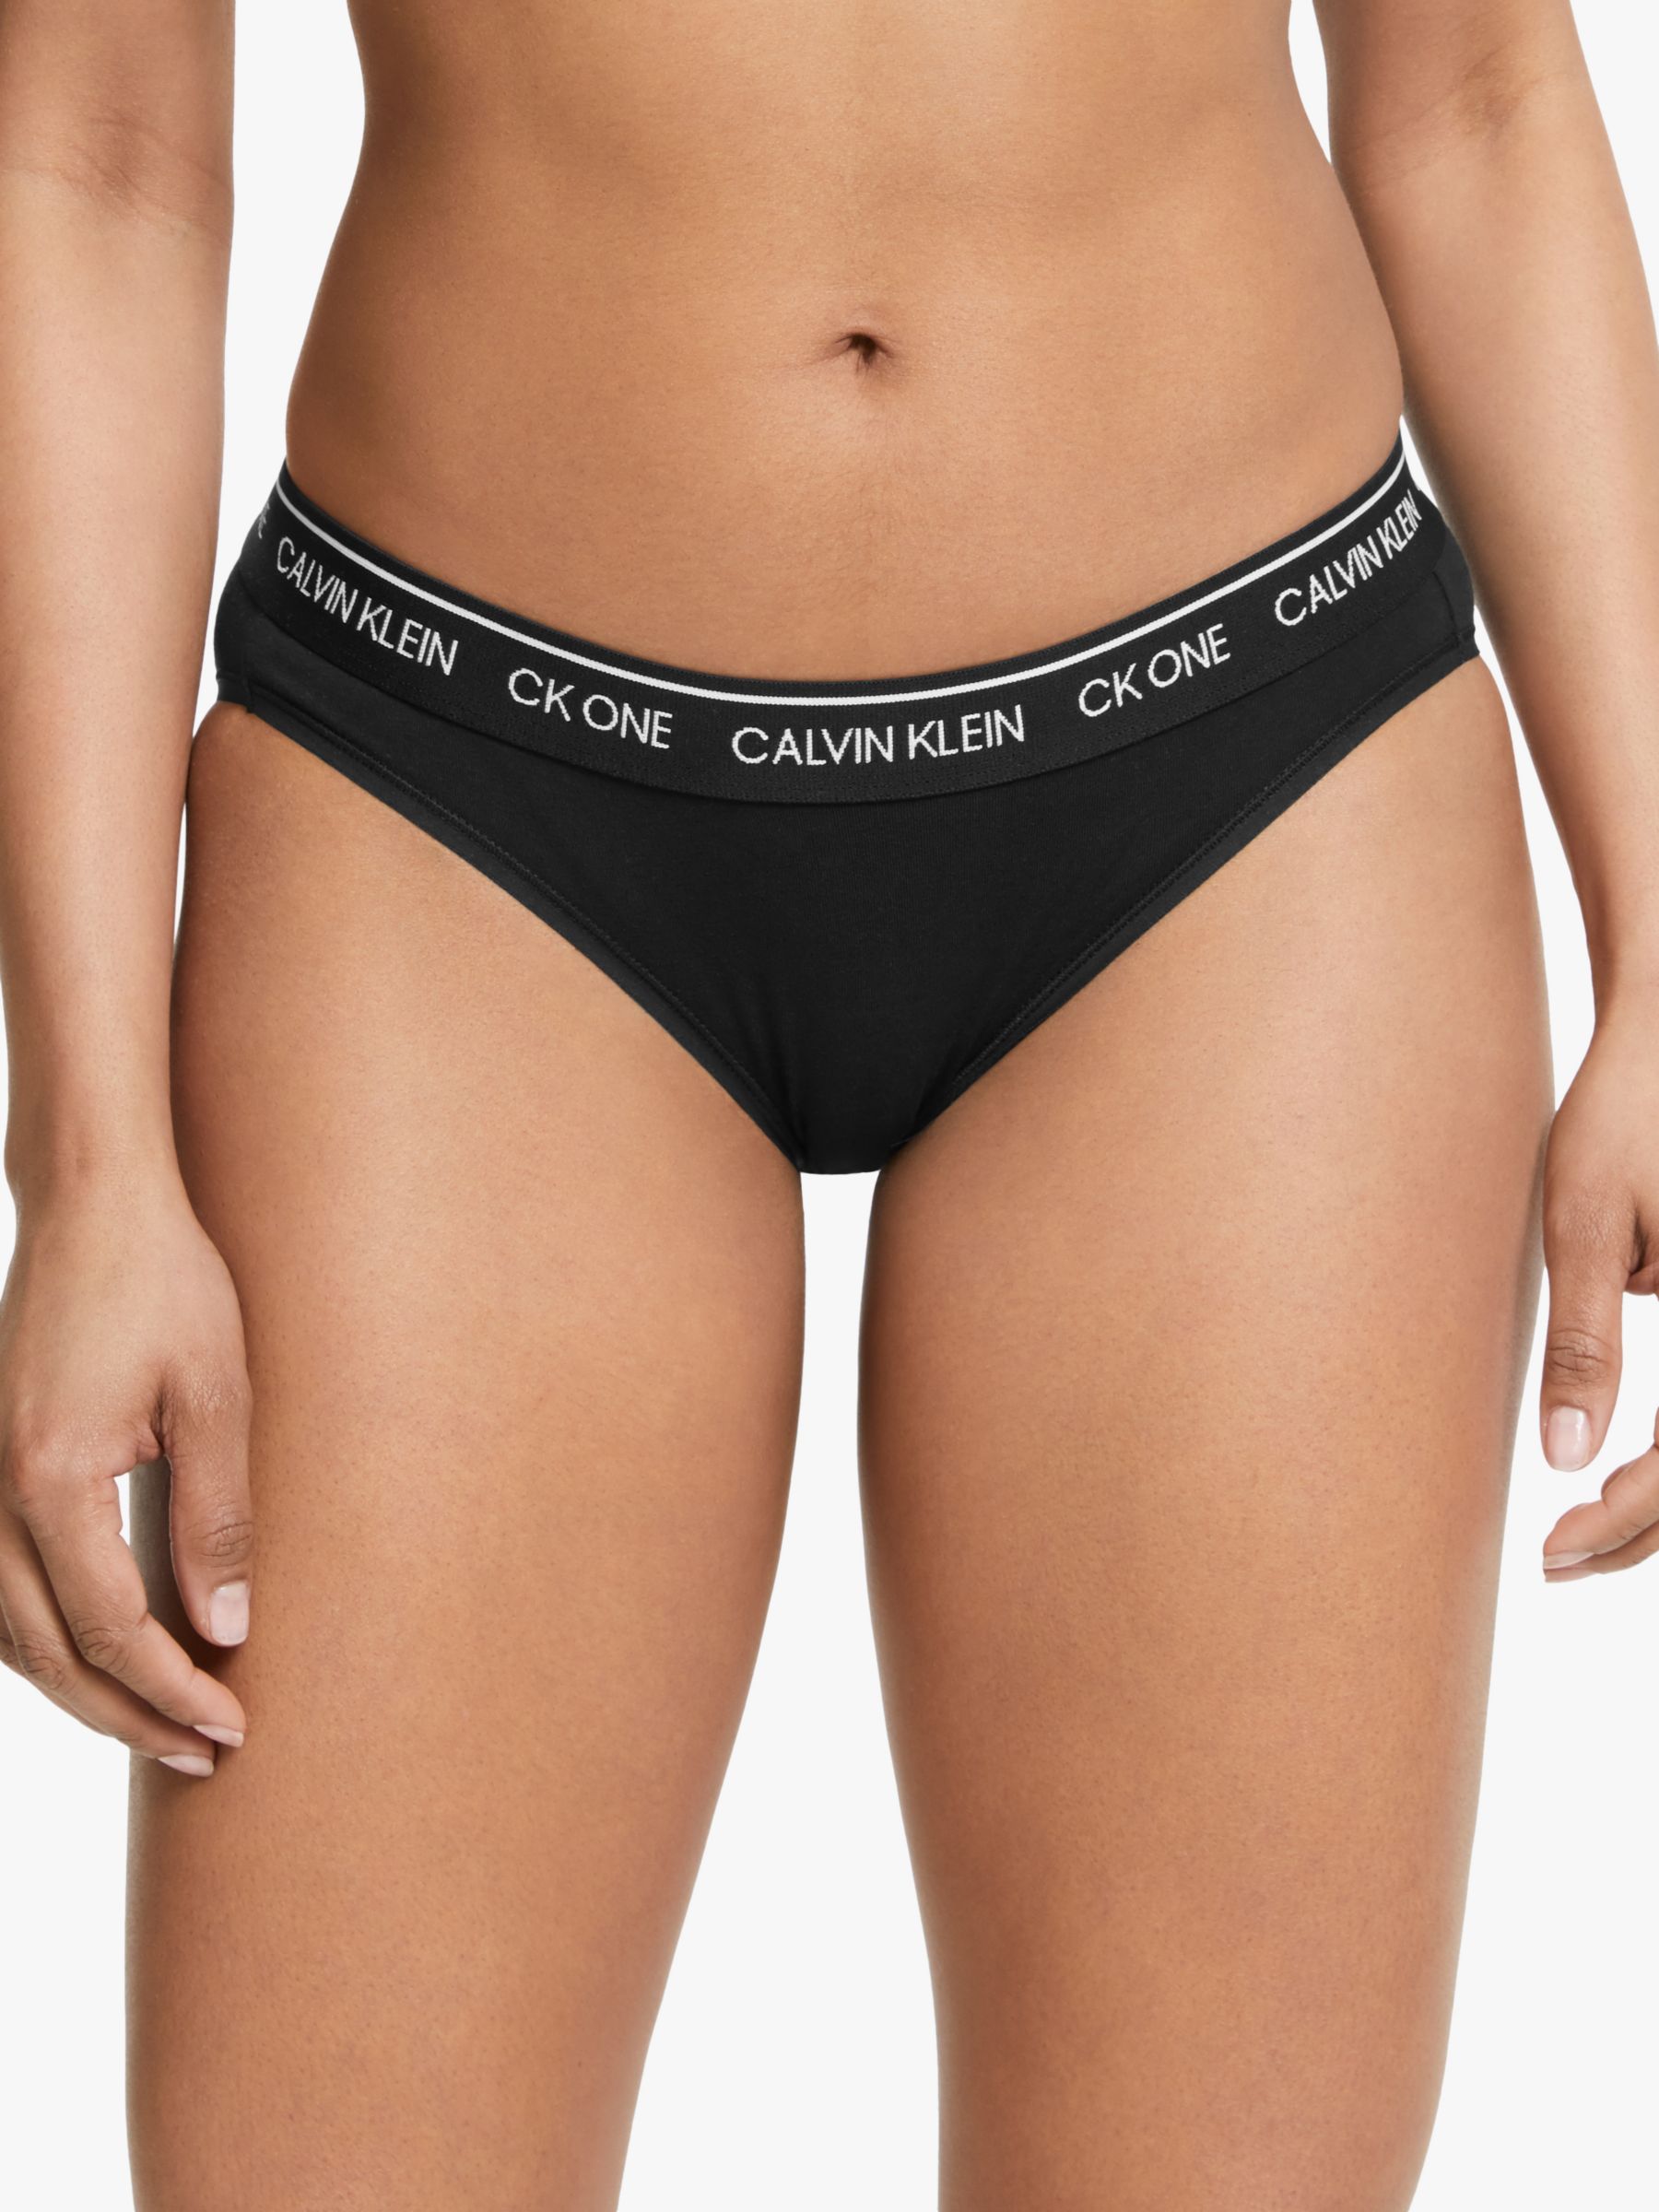 Calvin Klein Underwear Ck One Logo Bikini Briefs Black At John Lewis And Partners